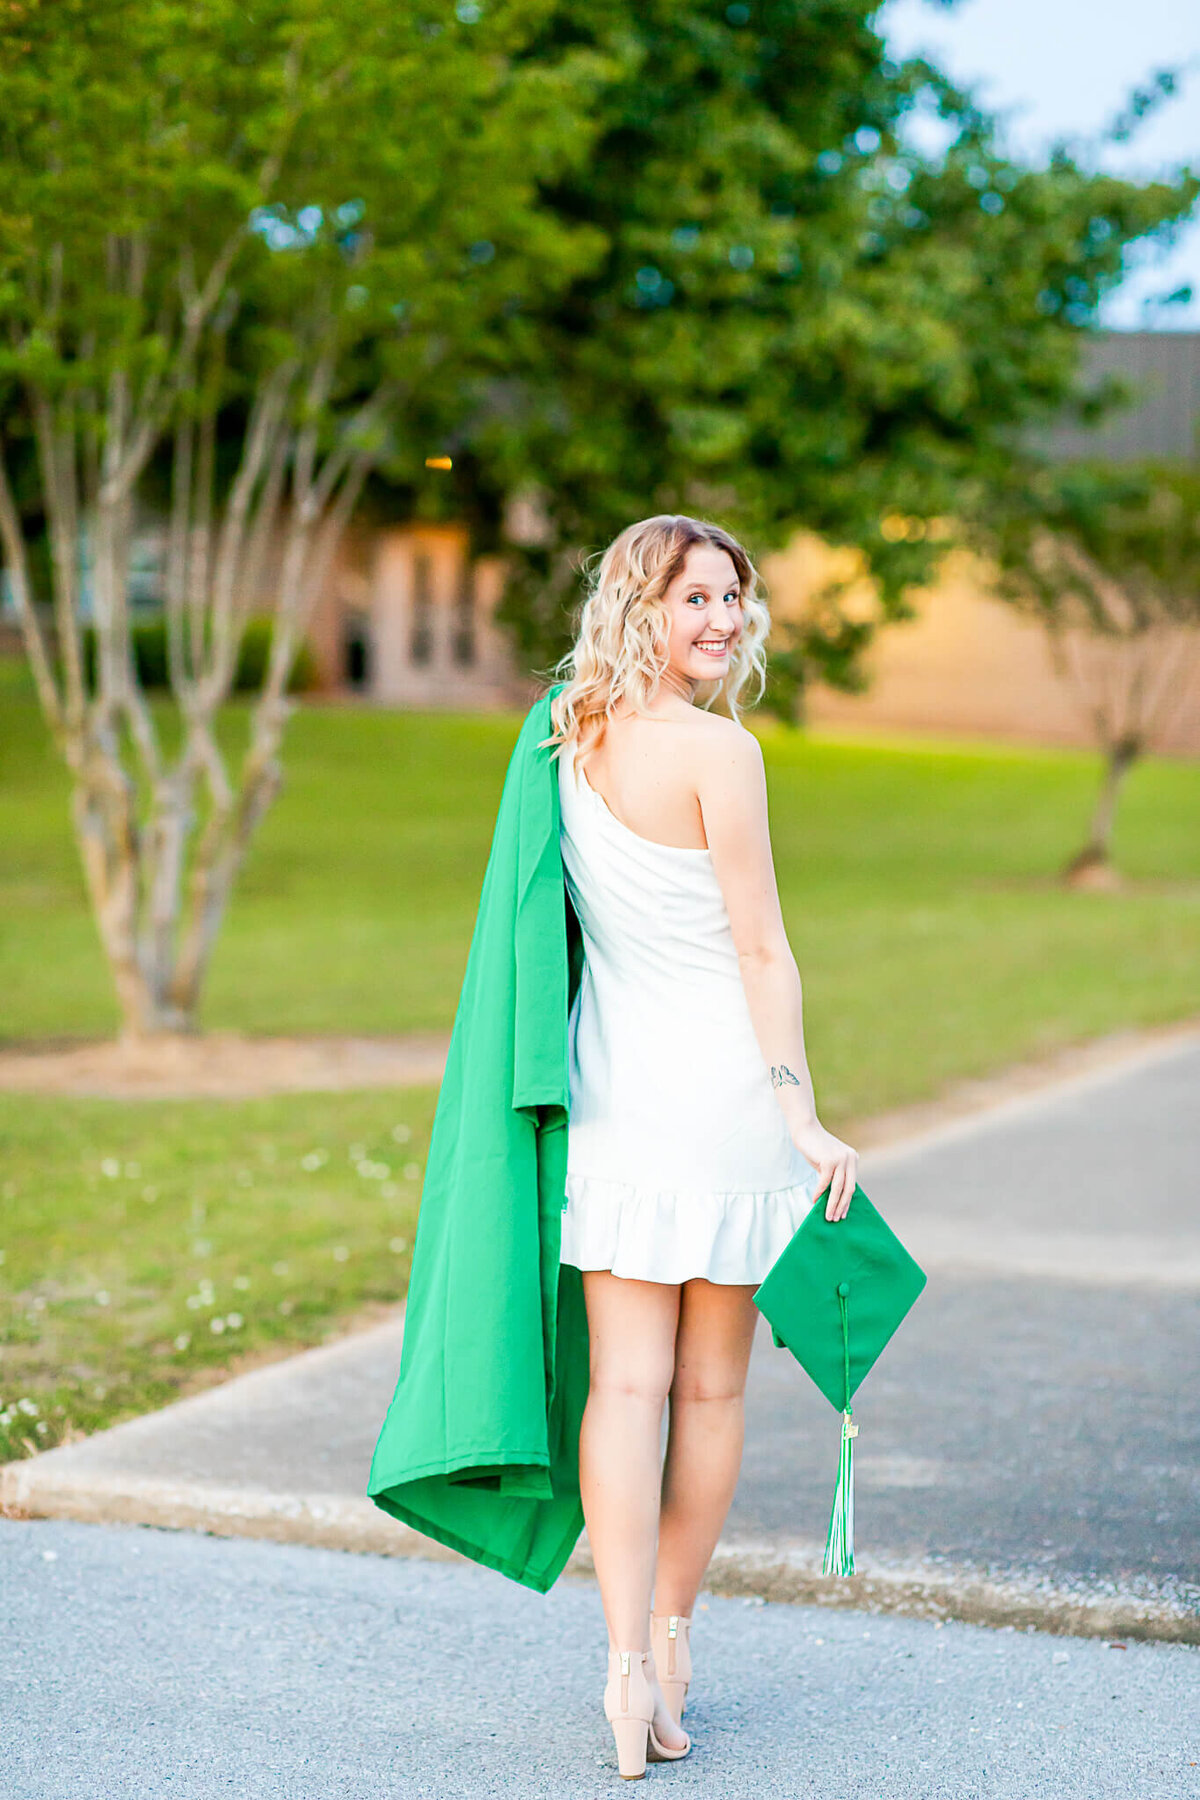 Graduating senior walks her high school sidewalks with her cap and gown